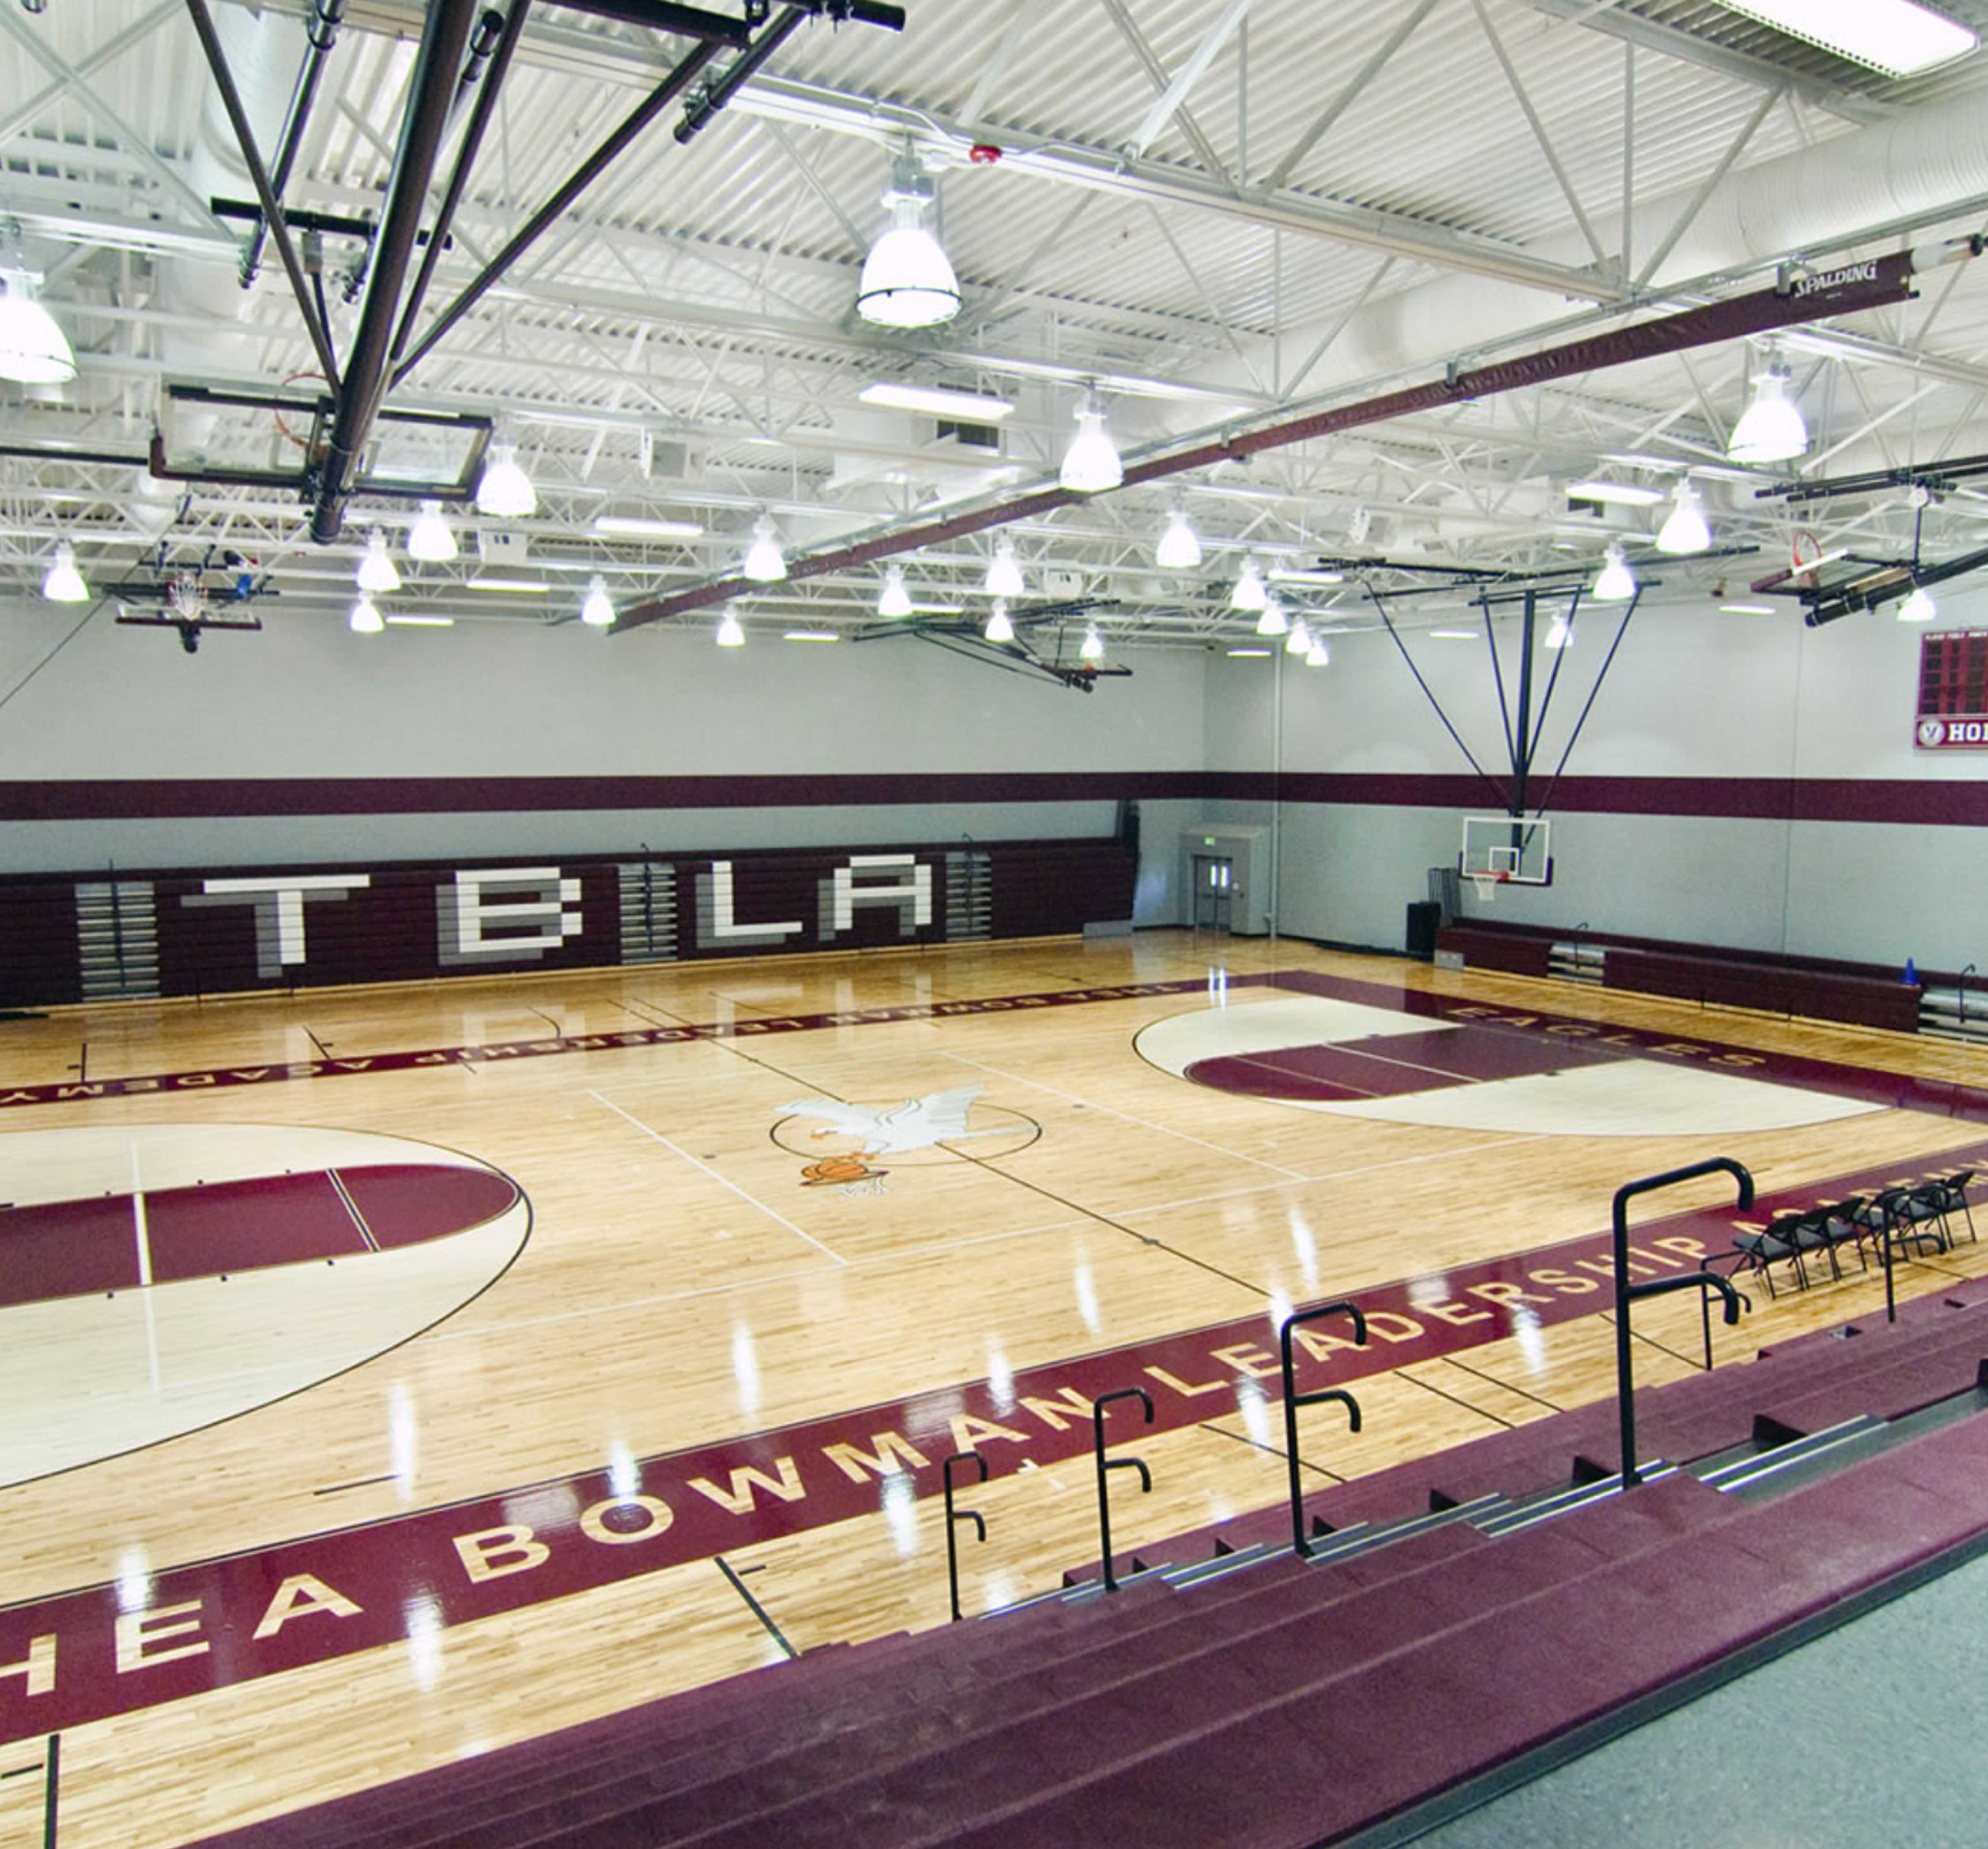 Thea Bowman Academy Gymnasium